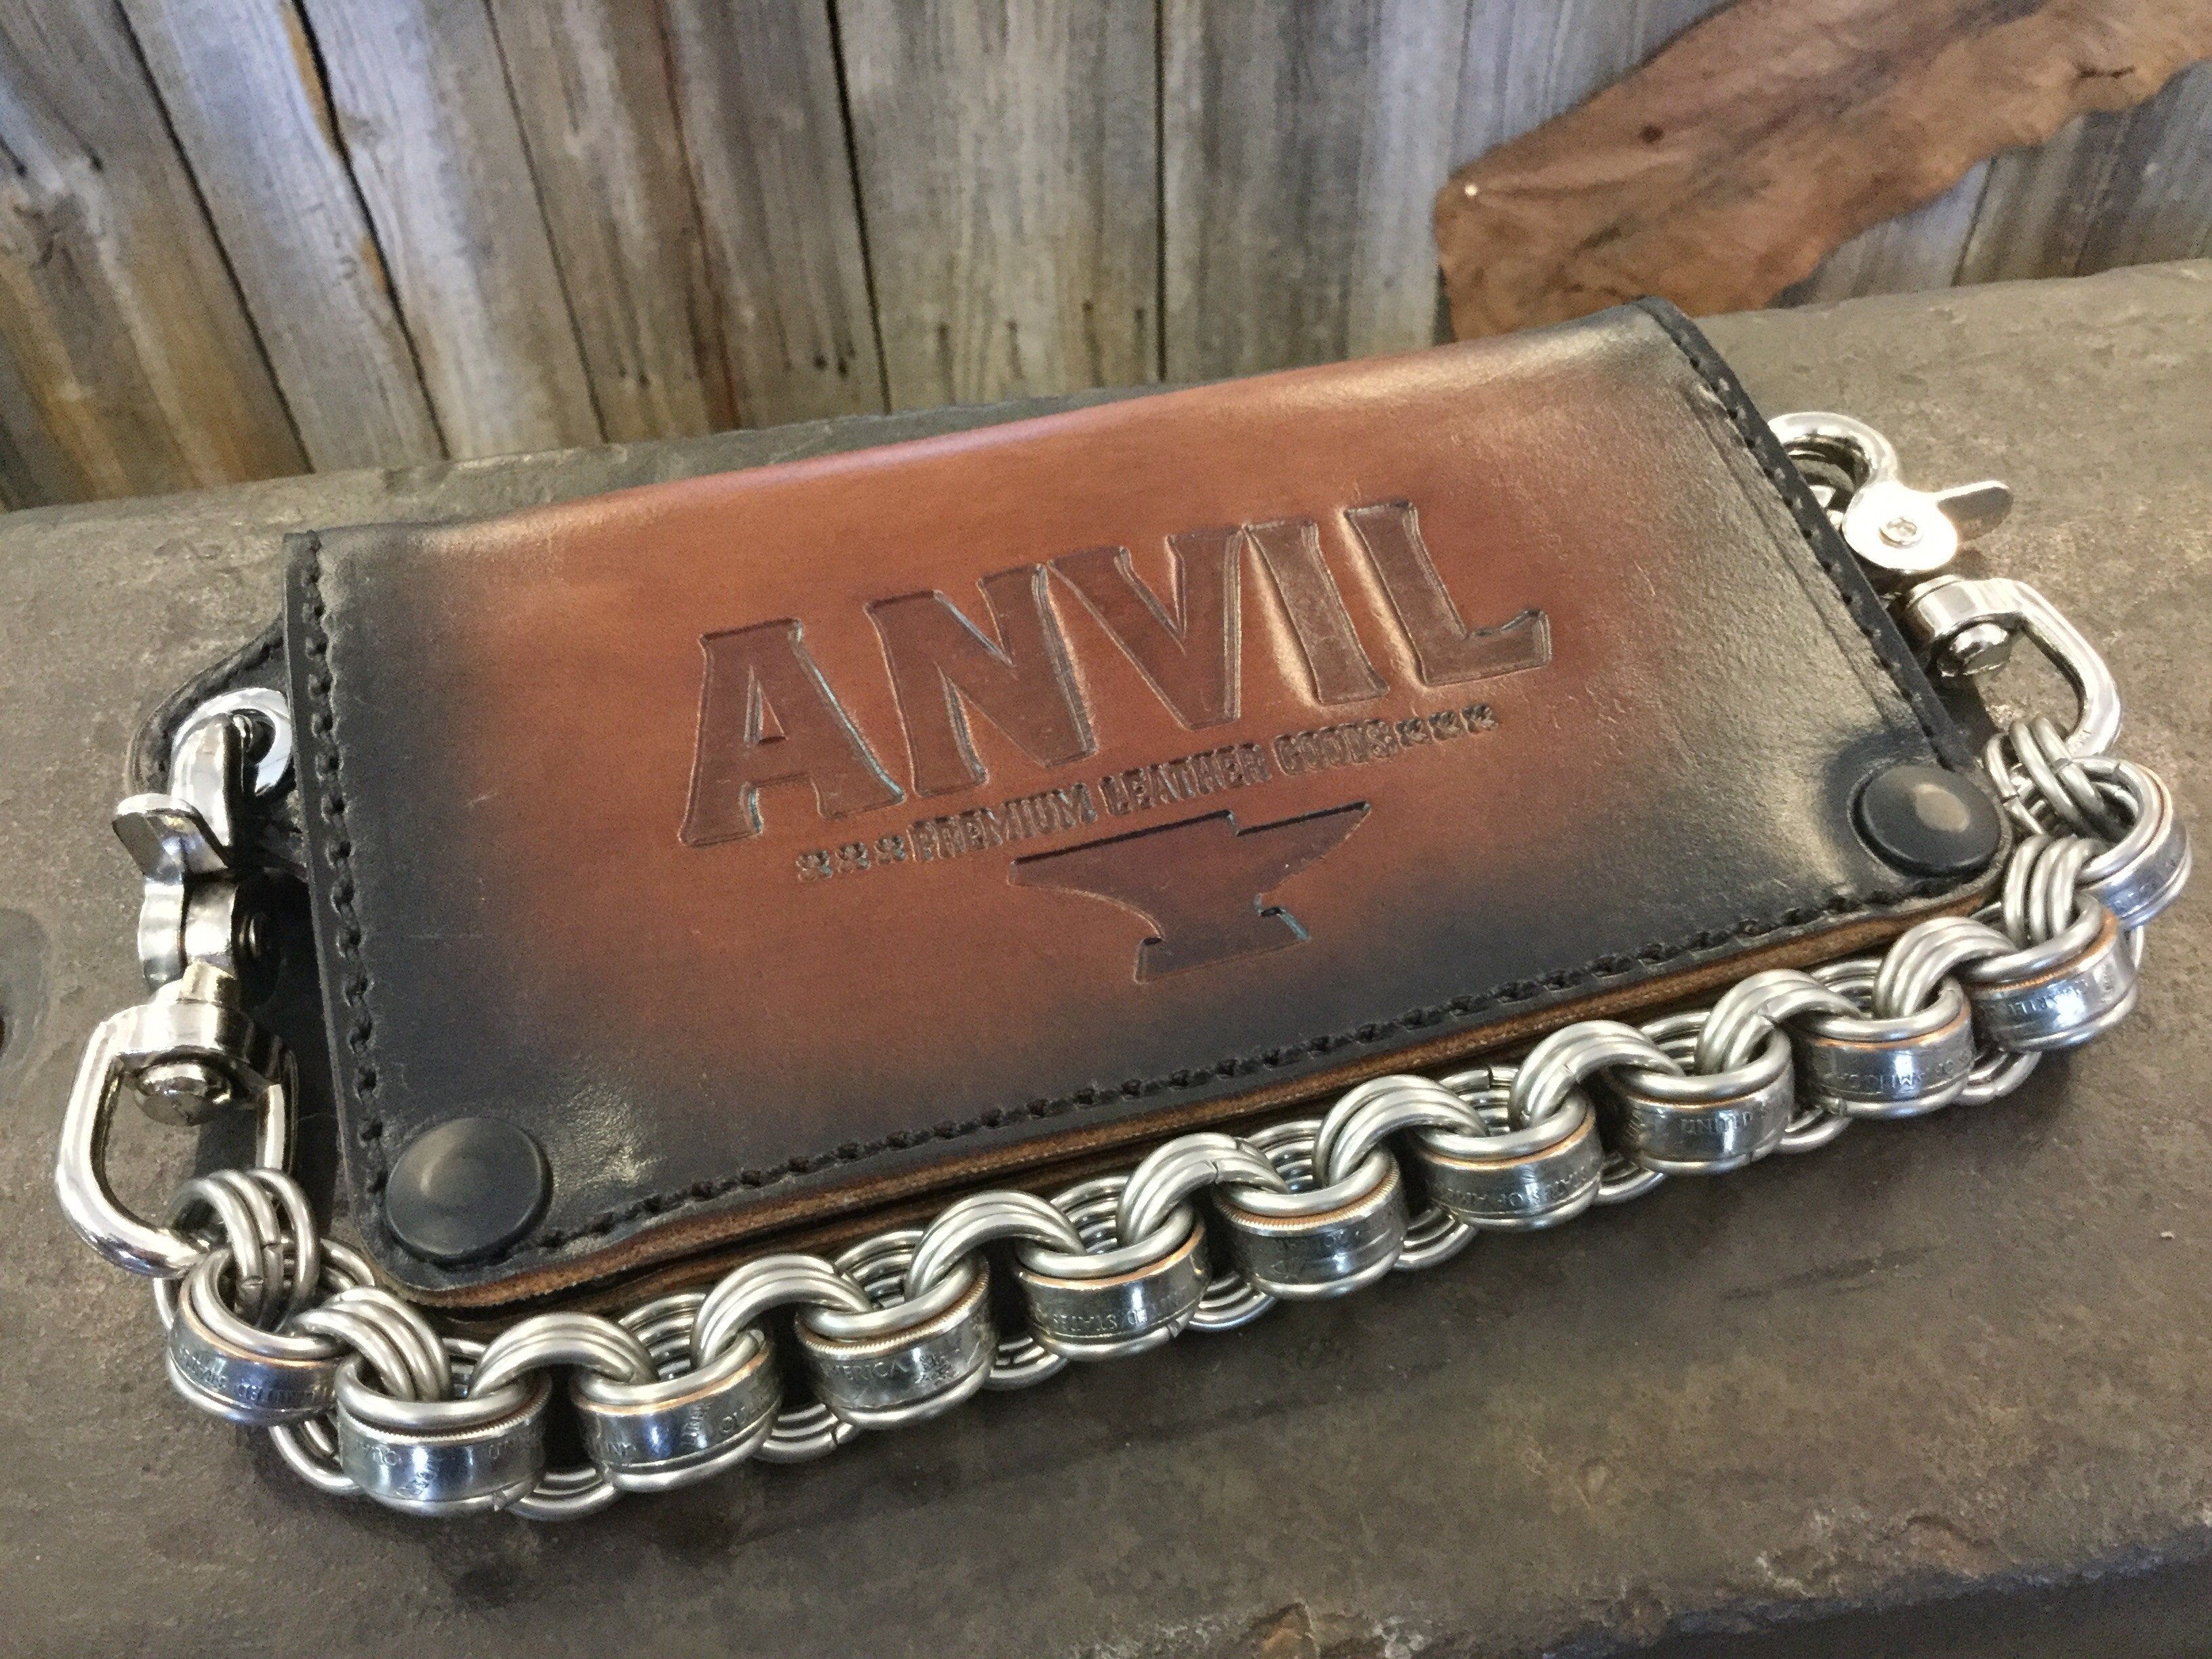 Leather Money Clip Wallet - Anvil Customs